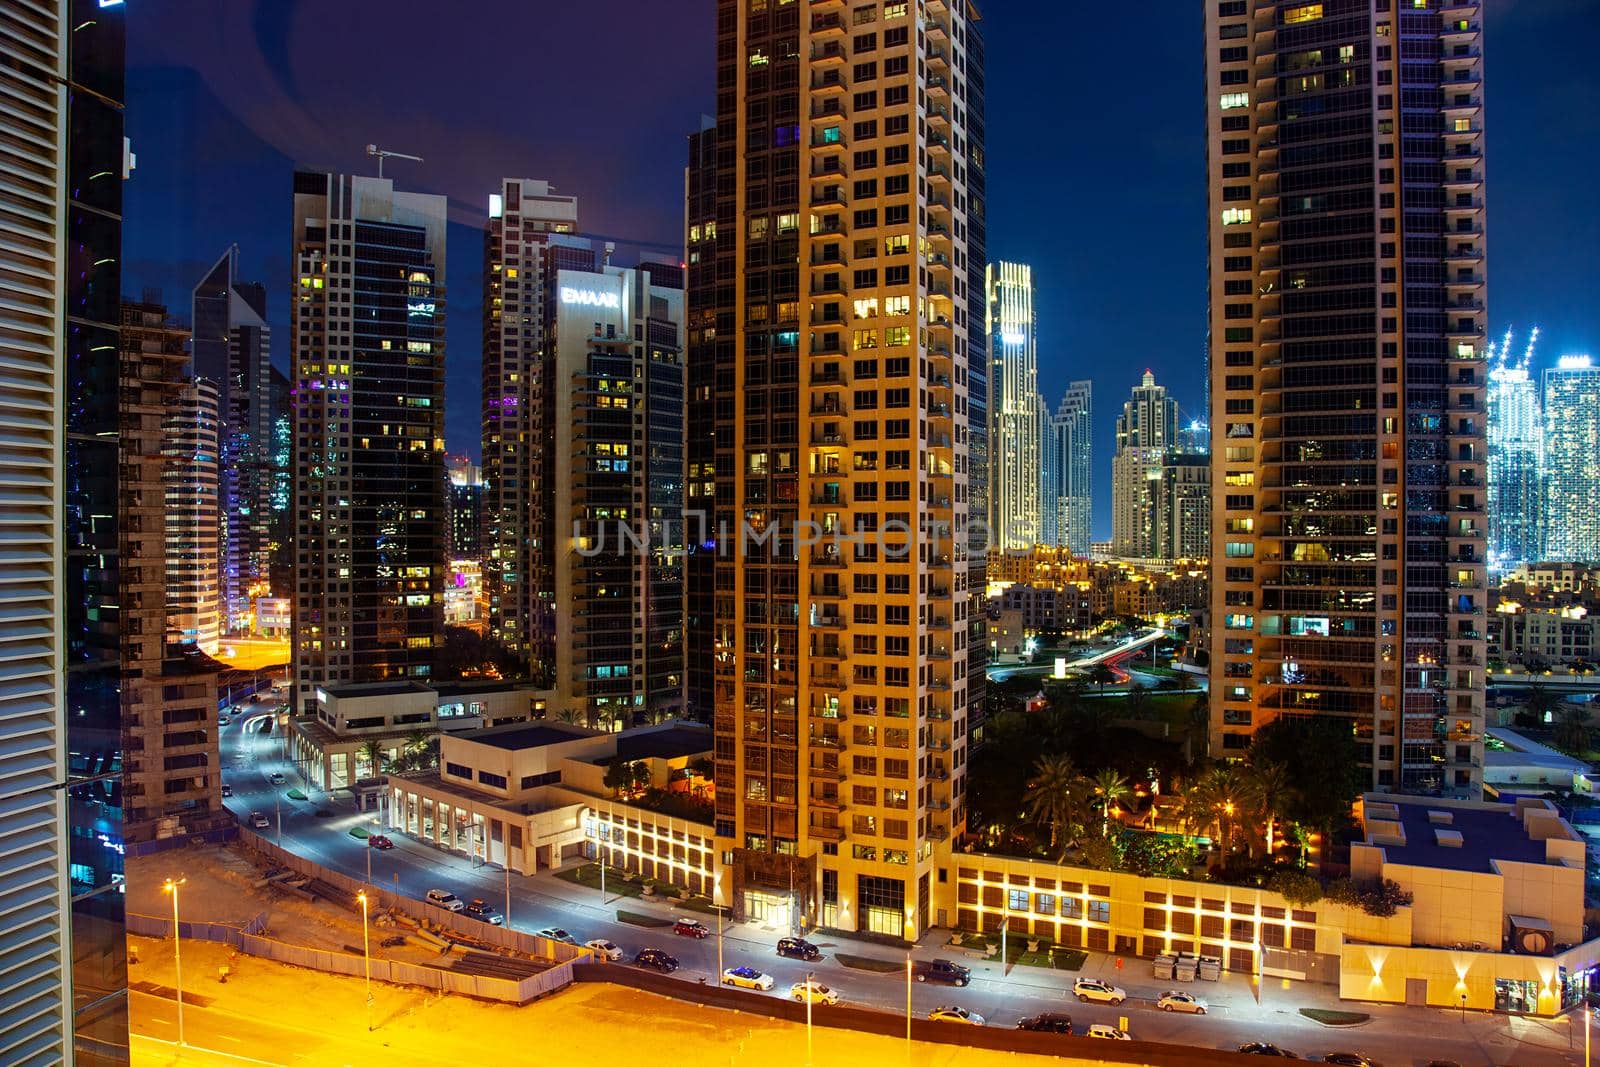 Dubai/OAE - 01 05 2020: Night Downtown View